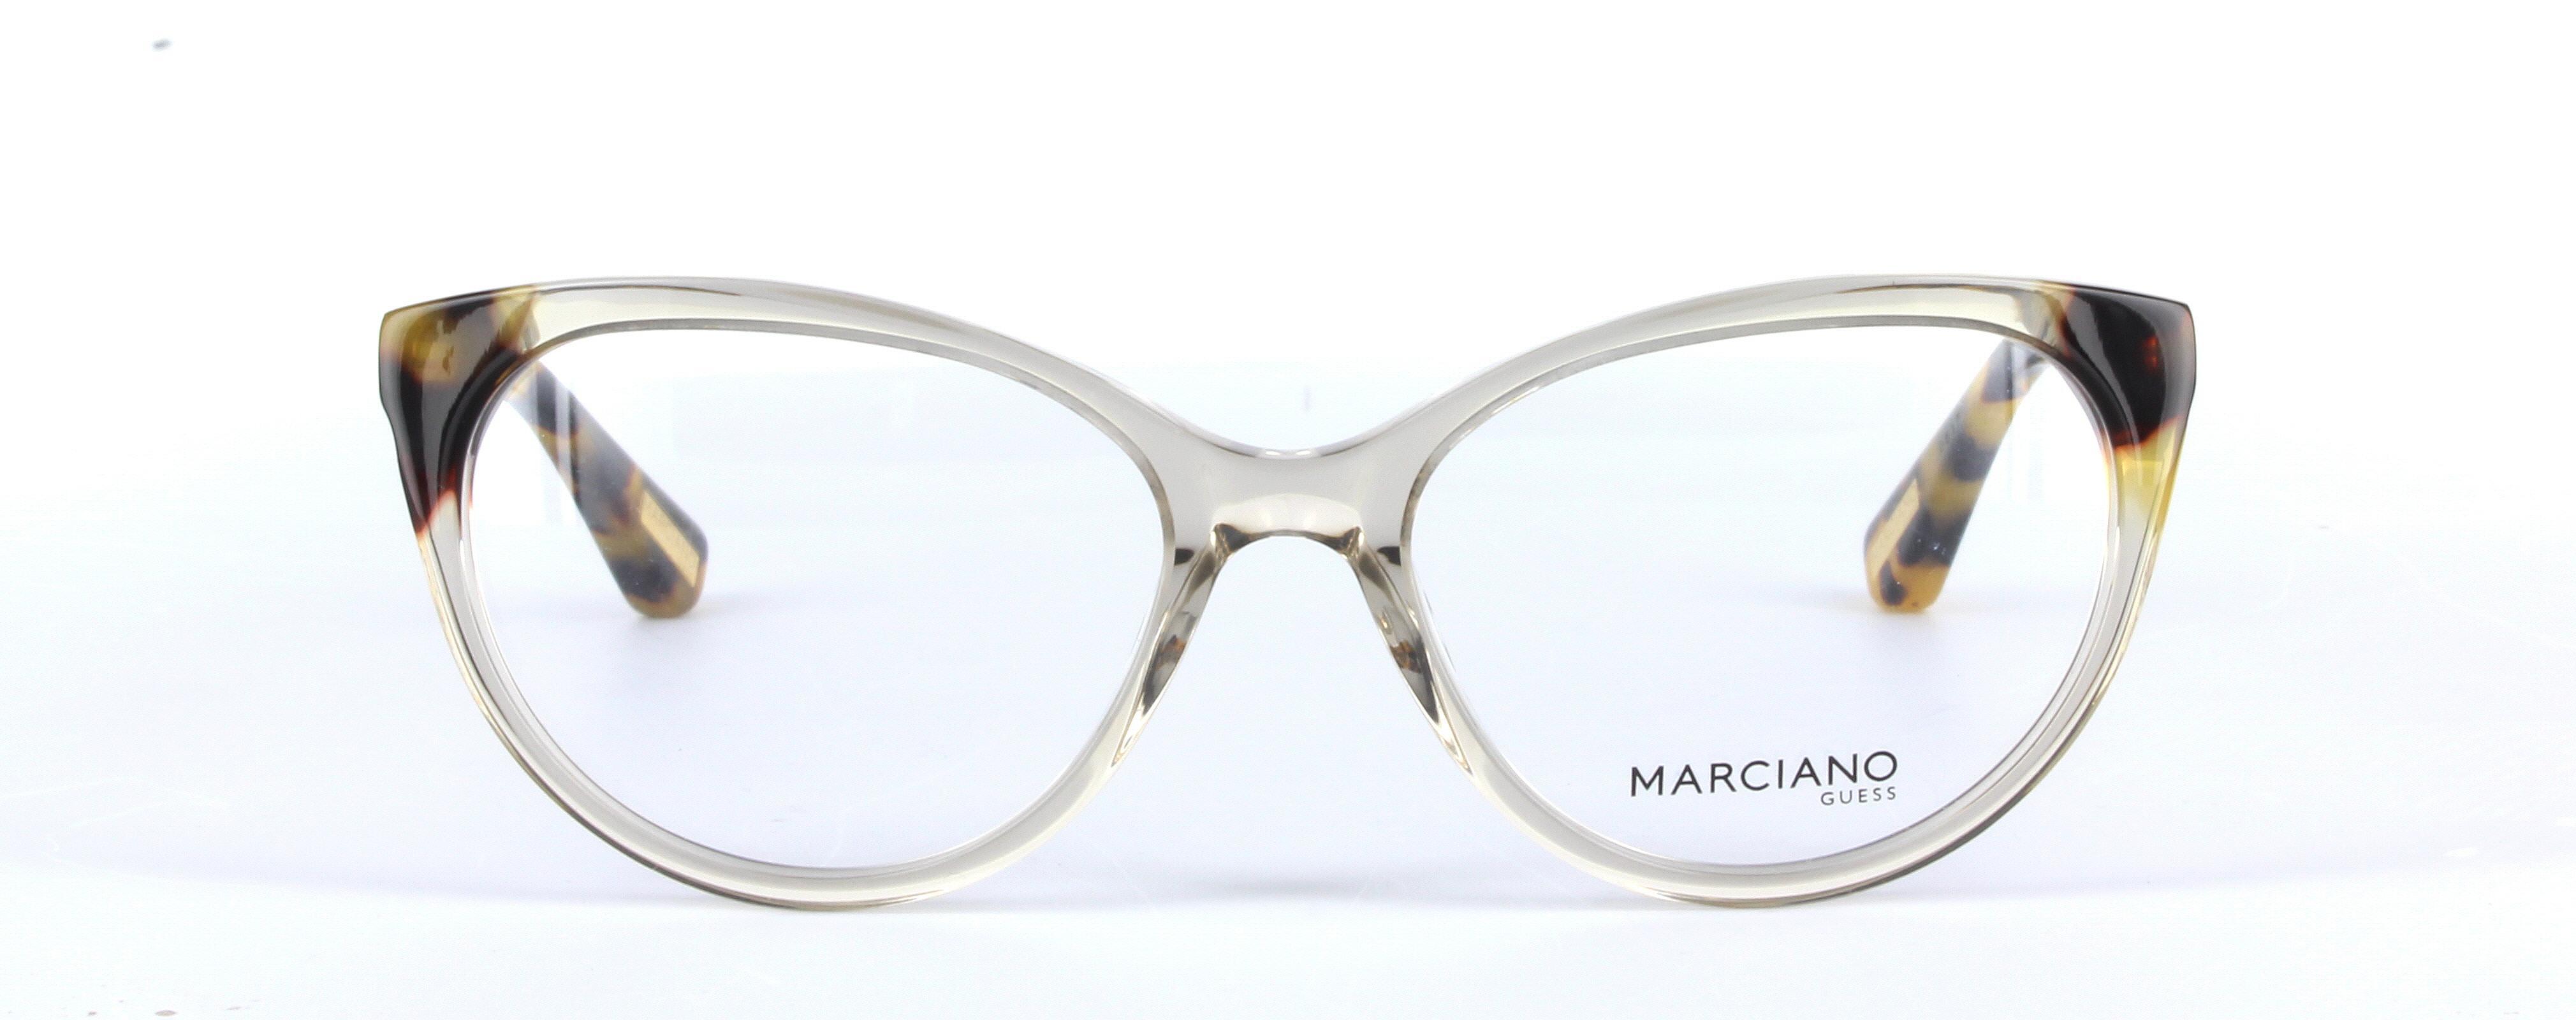 GUESS MARCIANO (GM0315-020) Tortoise Full Rim Cat Eye Acetate Glasses - Image View 5